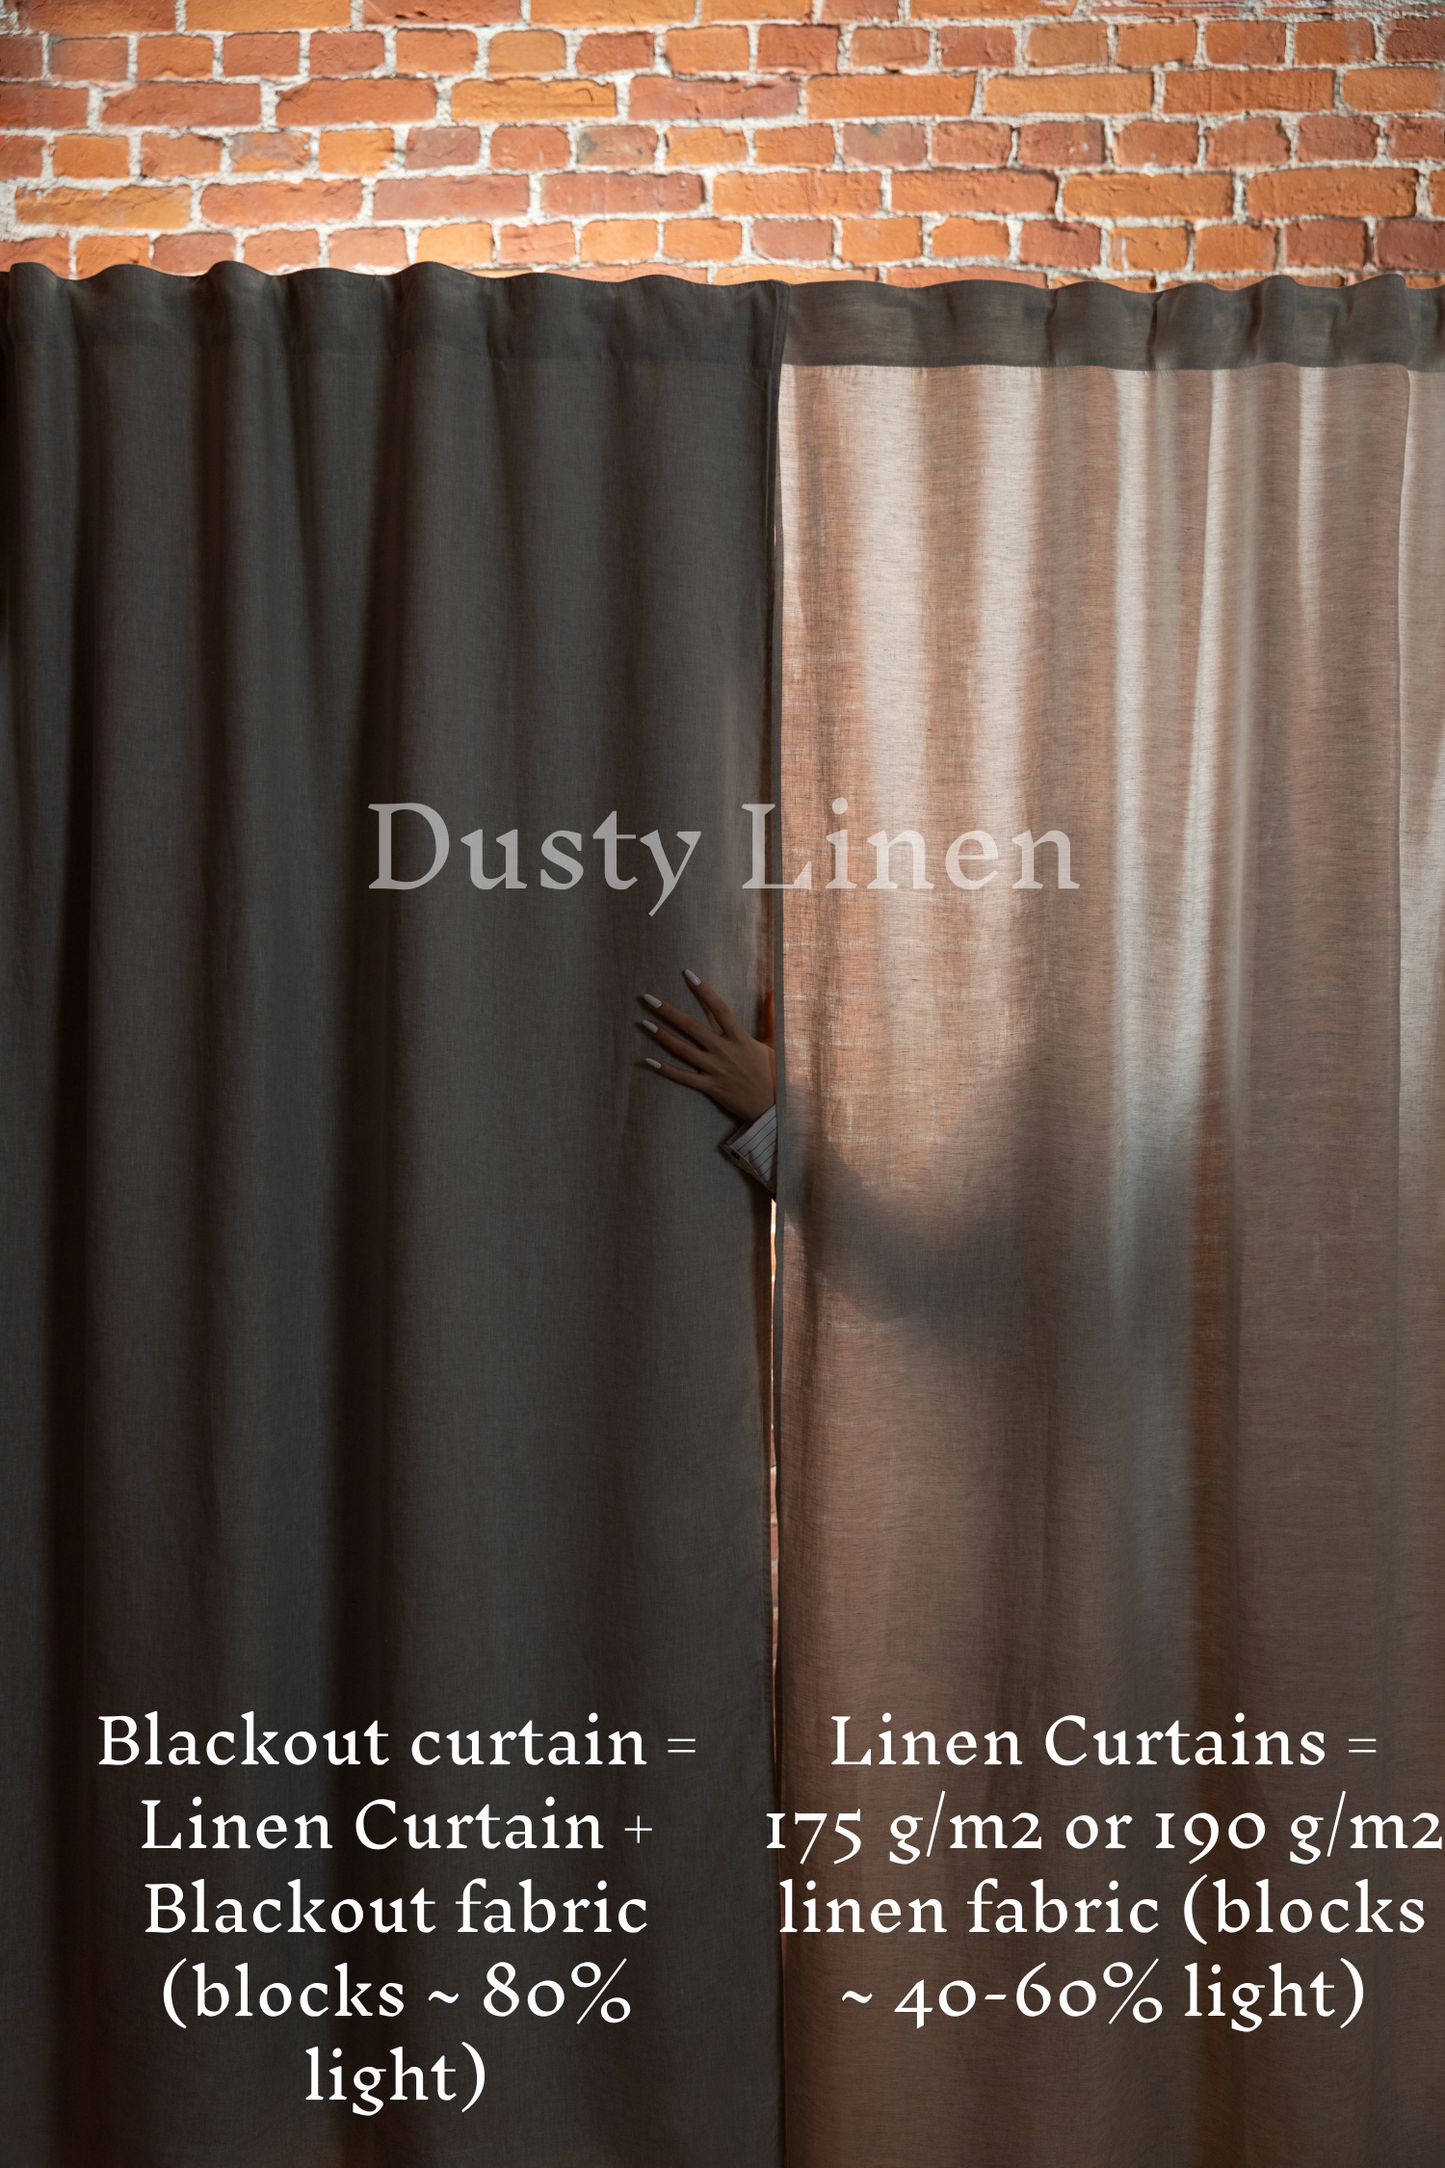 Set of 2 linen curtains (Density: 175 g/m2) in Natural Light color